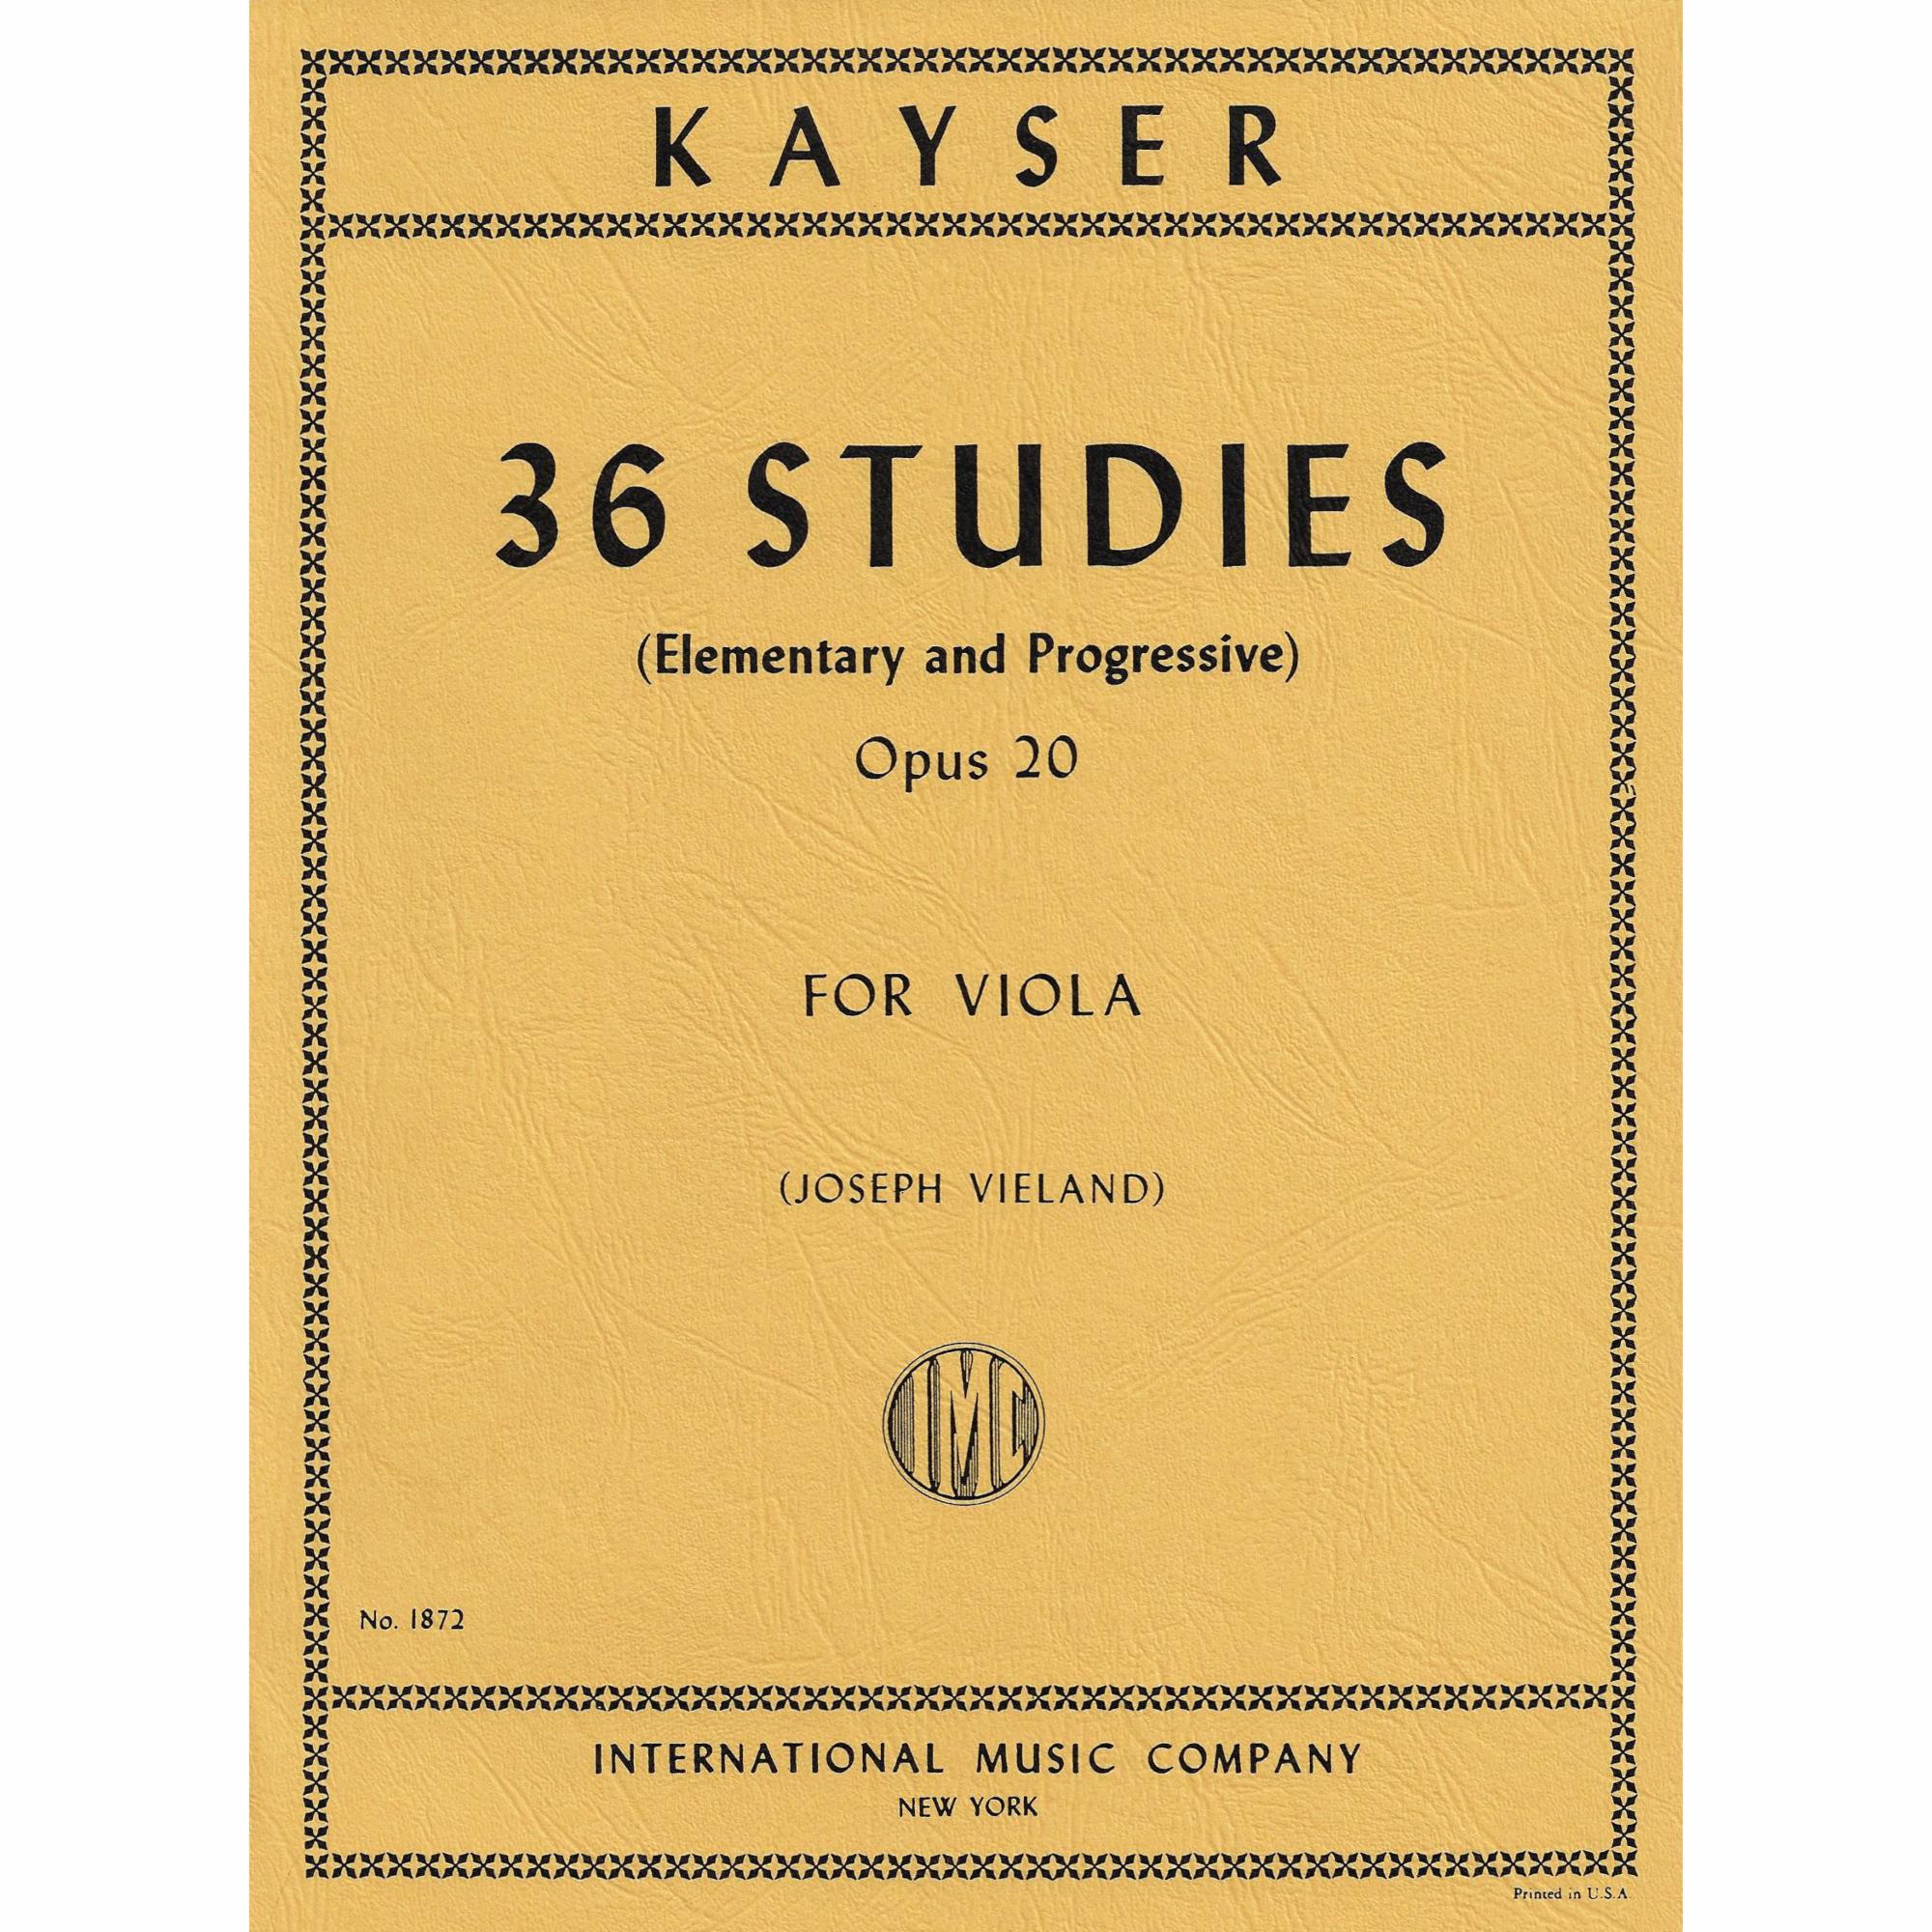 Kayser -- 36 Studies (Elementary and Progressive), Op. 20 for Viola